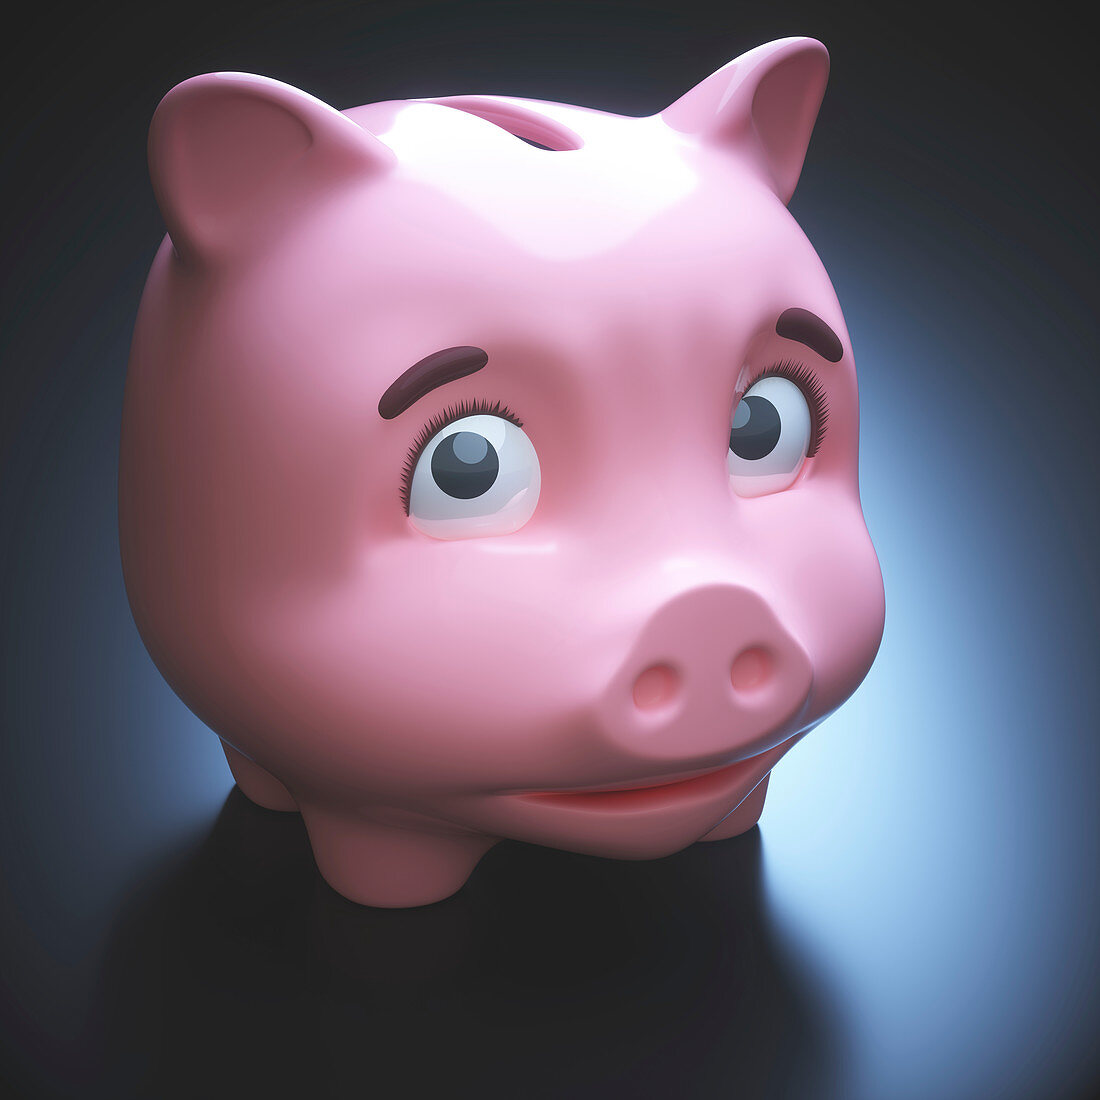 Piggy bank, close up